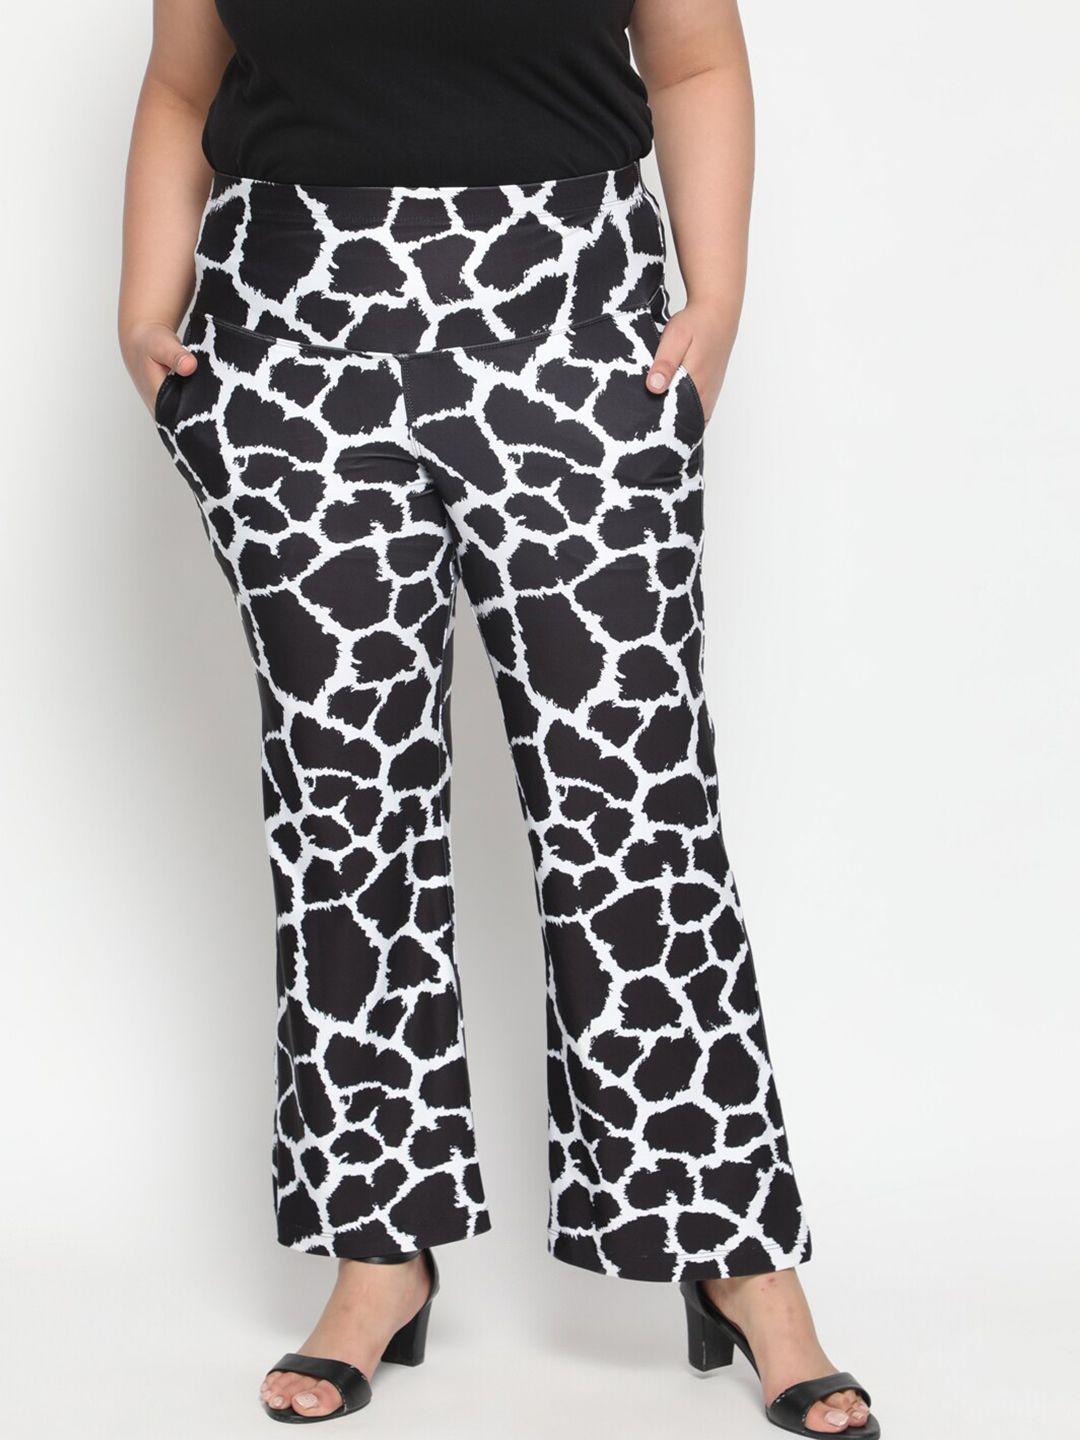 amydus women plus size black & white printed flare pants